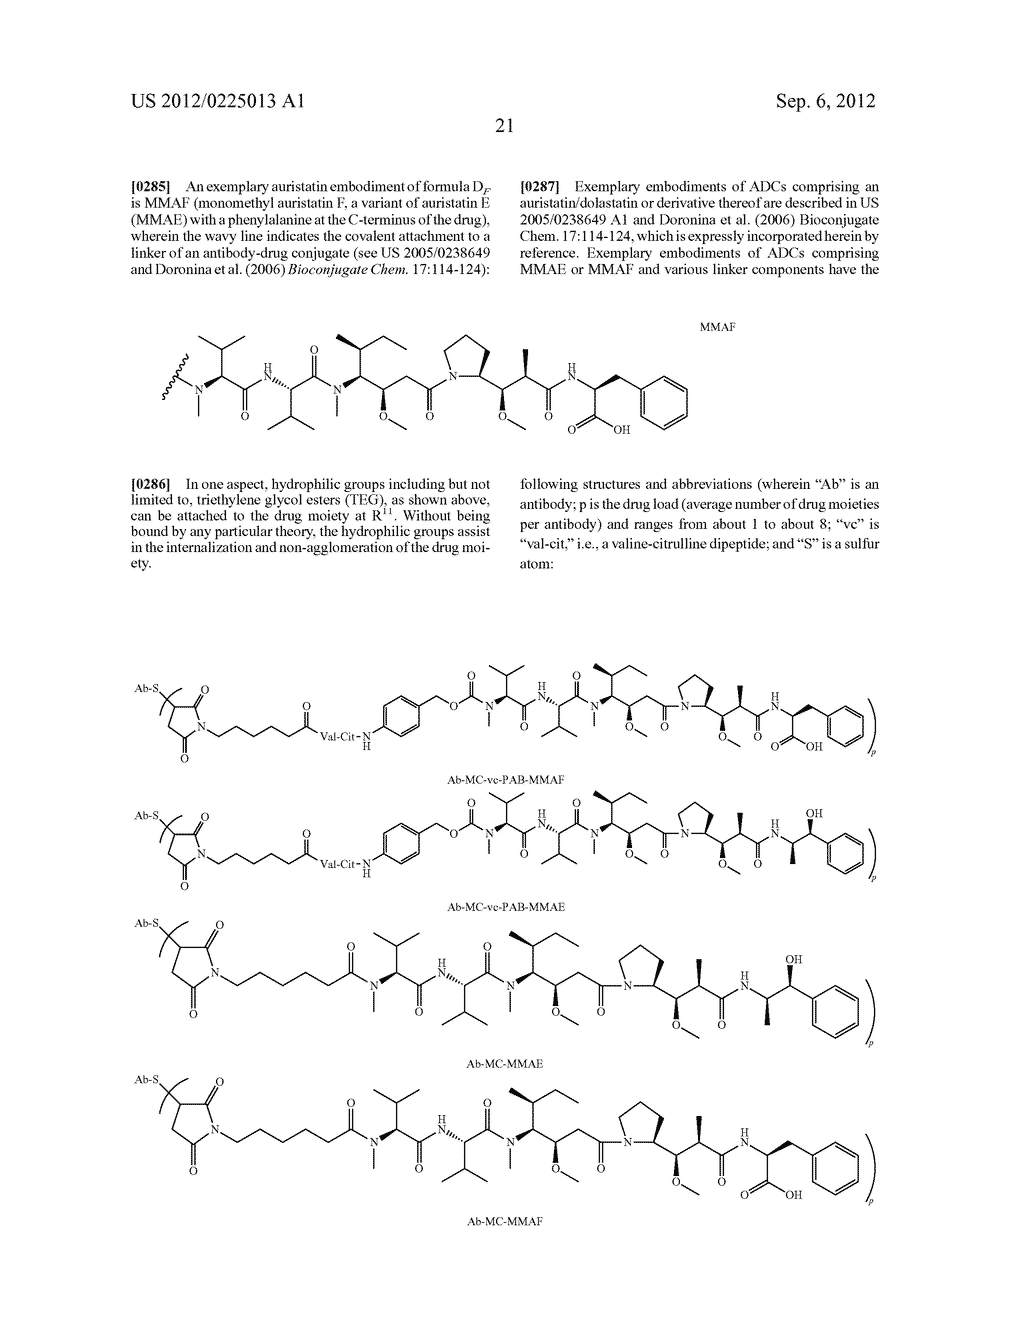 ANTI-MESOTHELIN ANTIBODIES AND IMMUNOCONJUGATES - diagram, schematic, and image 54